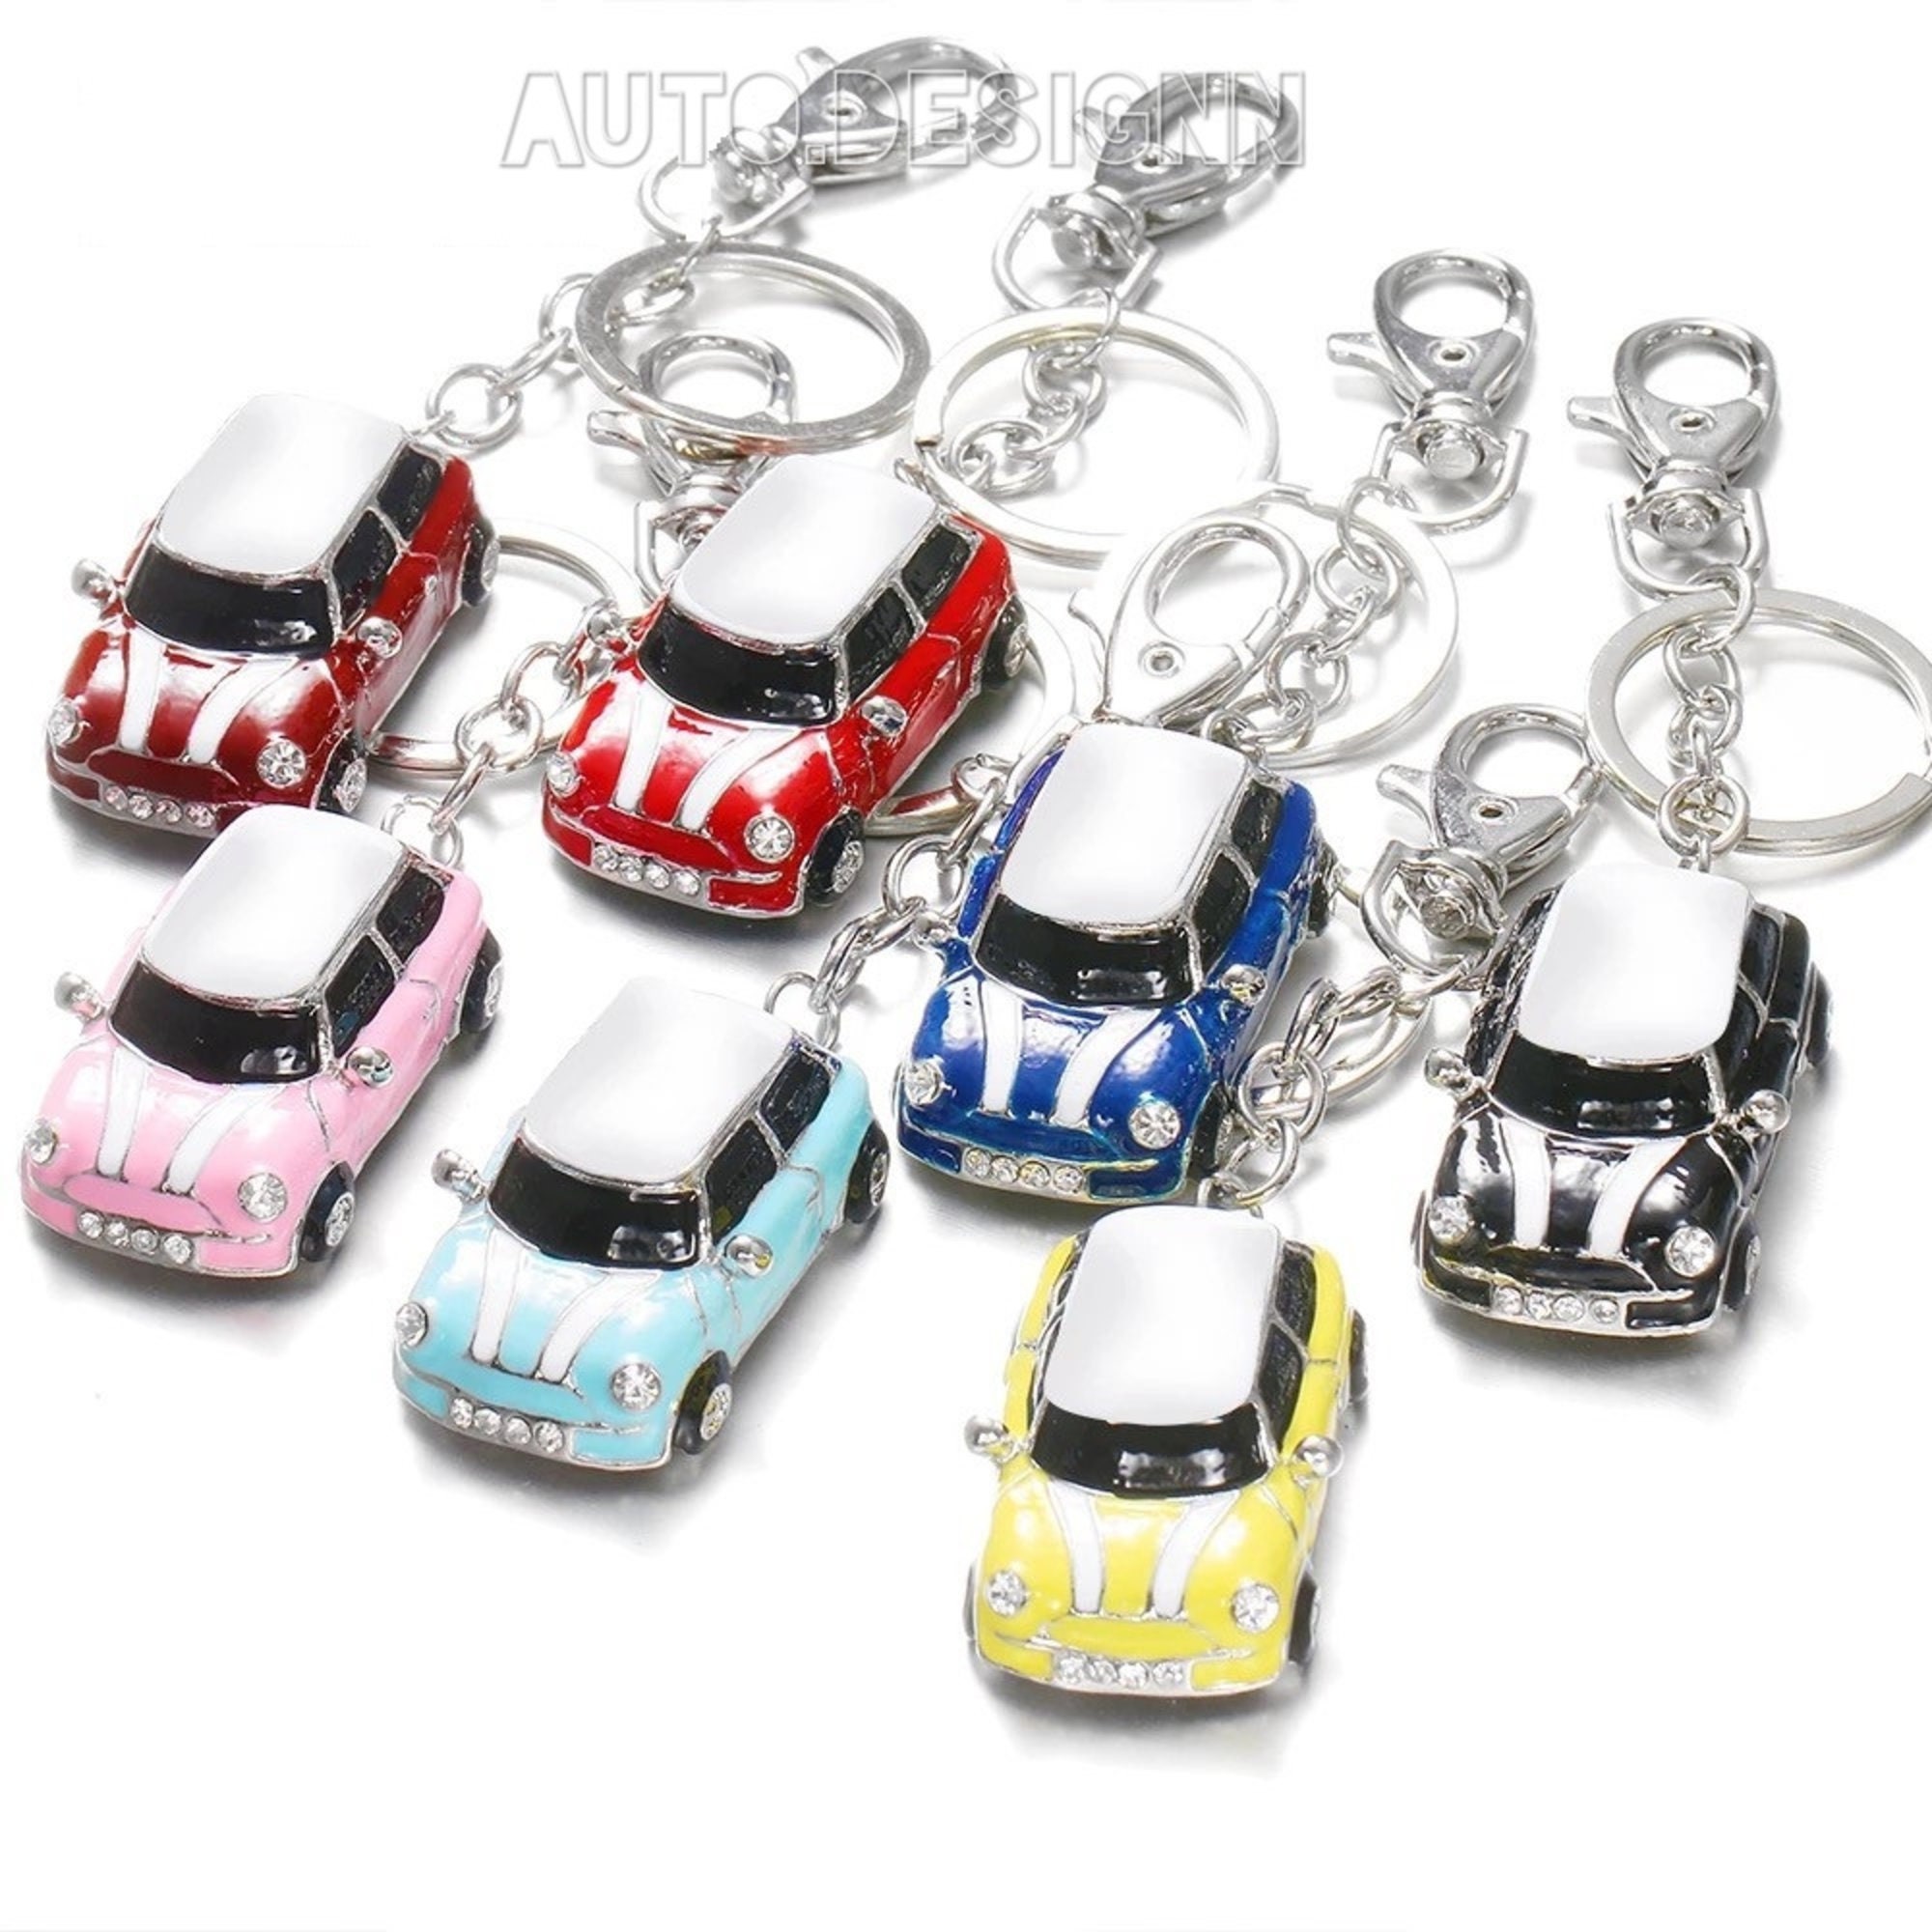 80902352309 - Genuine MINI Car Key Ring - Pepper White